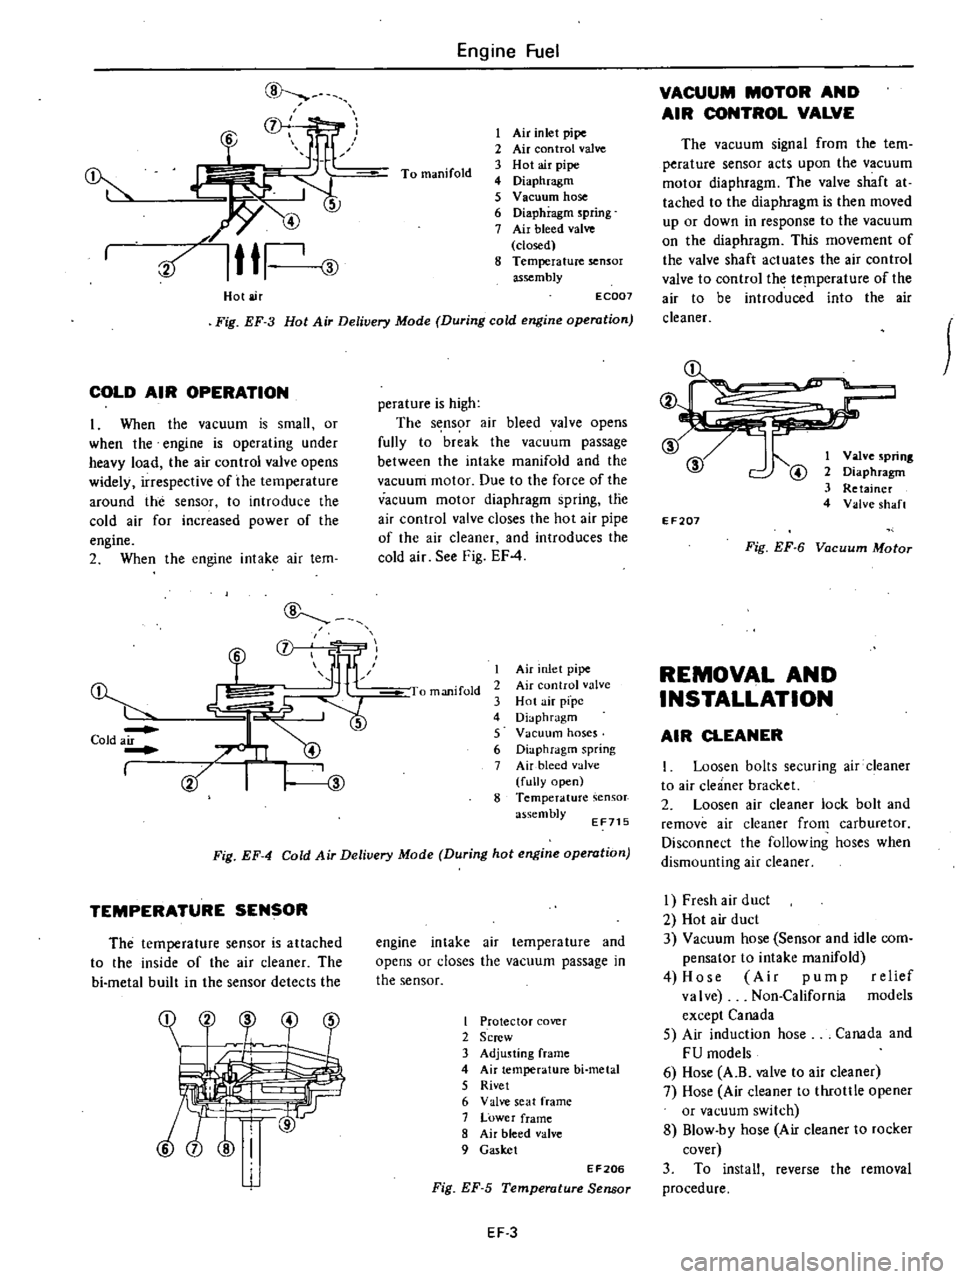 DATSUN 210 1979  Service Manual 
Hot

air 
Engine 
Fuel

To 
manifold 
I 
Air 
inlet

pipe

2 
Air

con 
trol

valve

3 
Hot 
air

pipe

4

Diaphragm

5 
V

Bellum 
hose

6

Diaphragm 
spring

7 
Air

bleed 
valve

closed

8

Temper